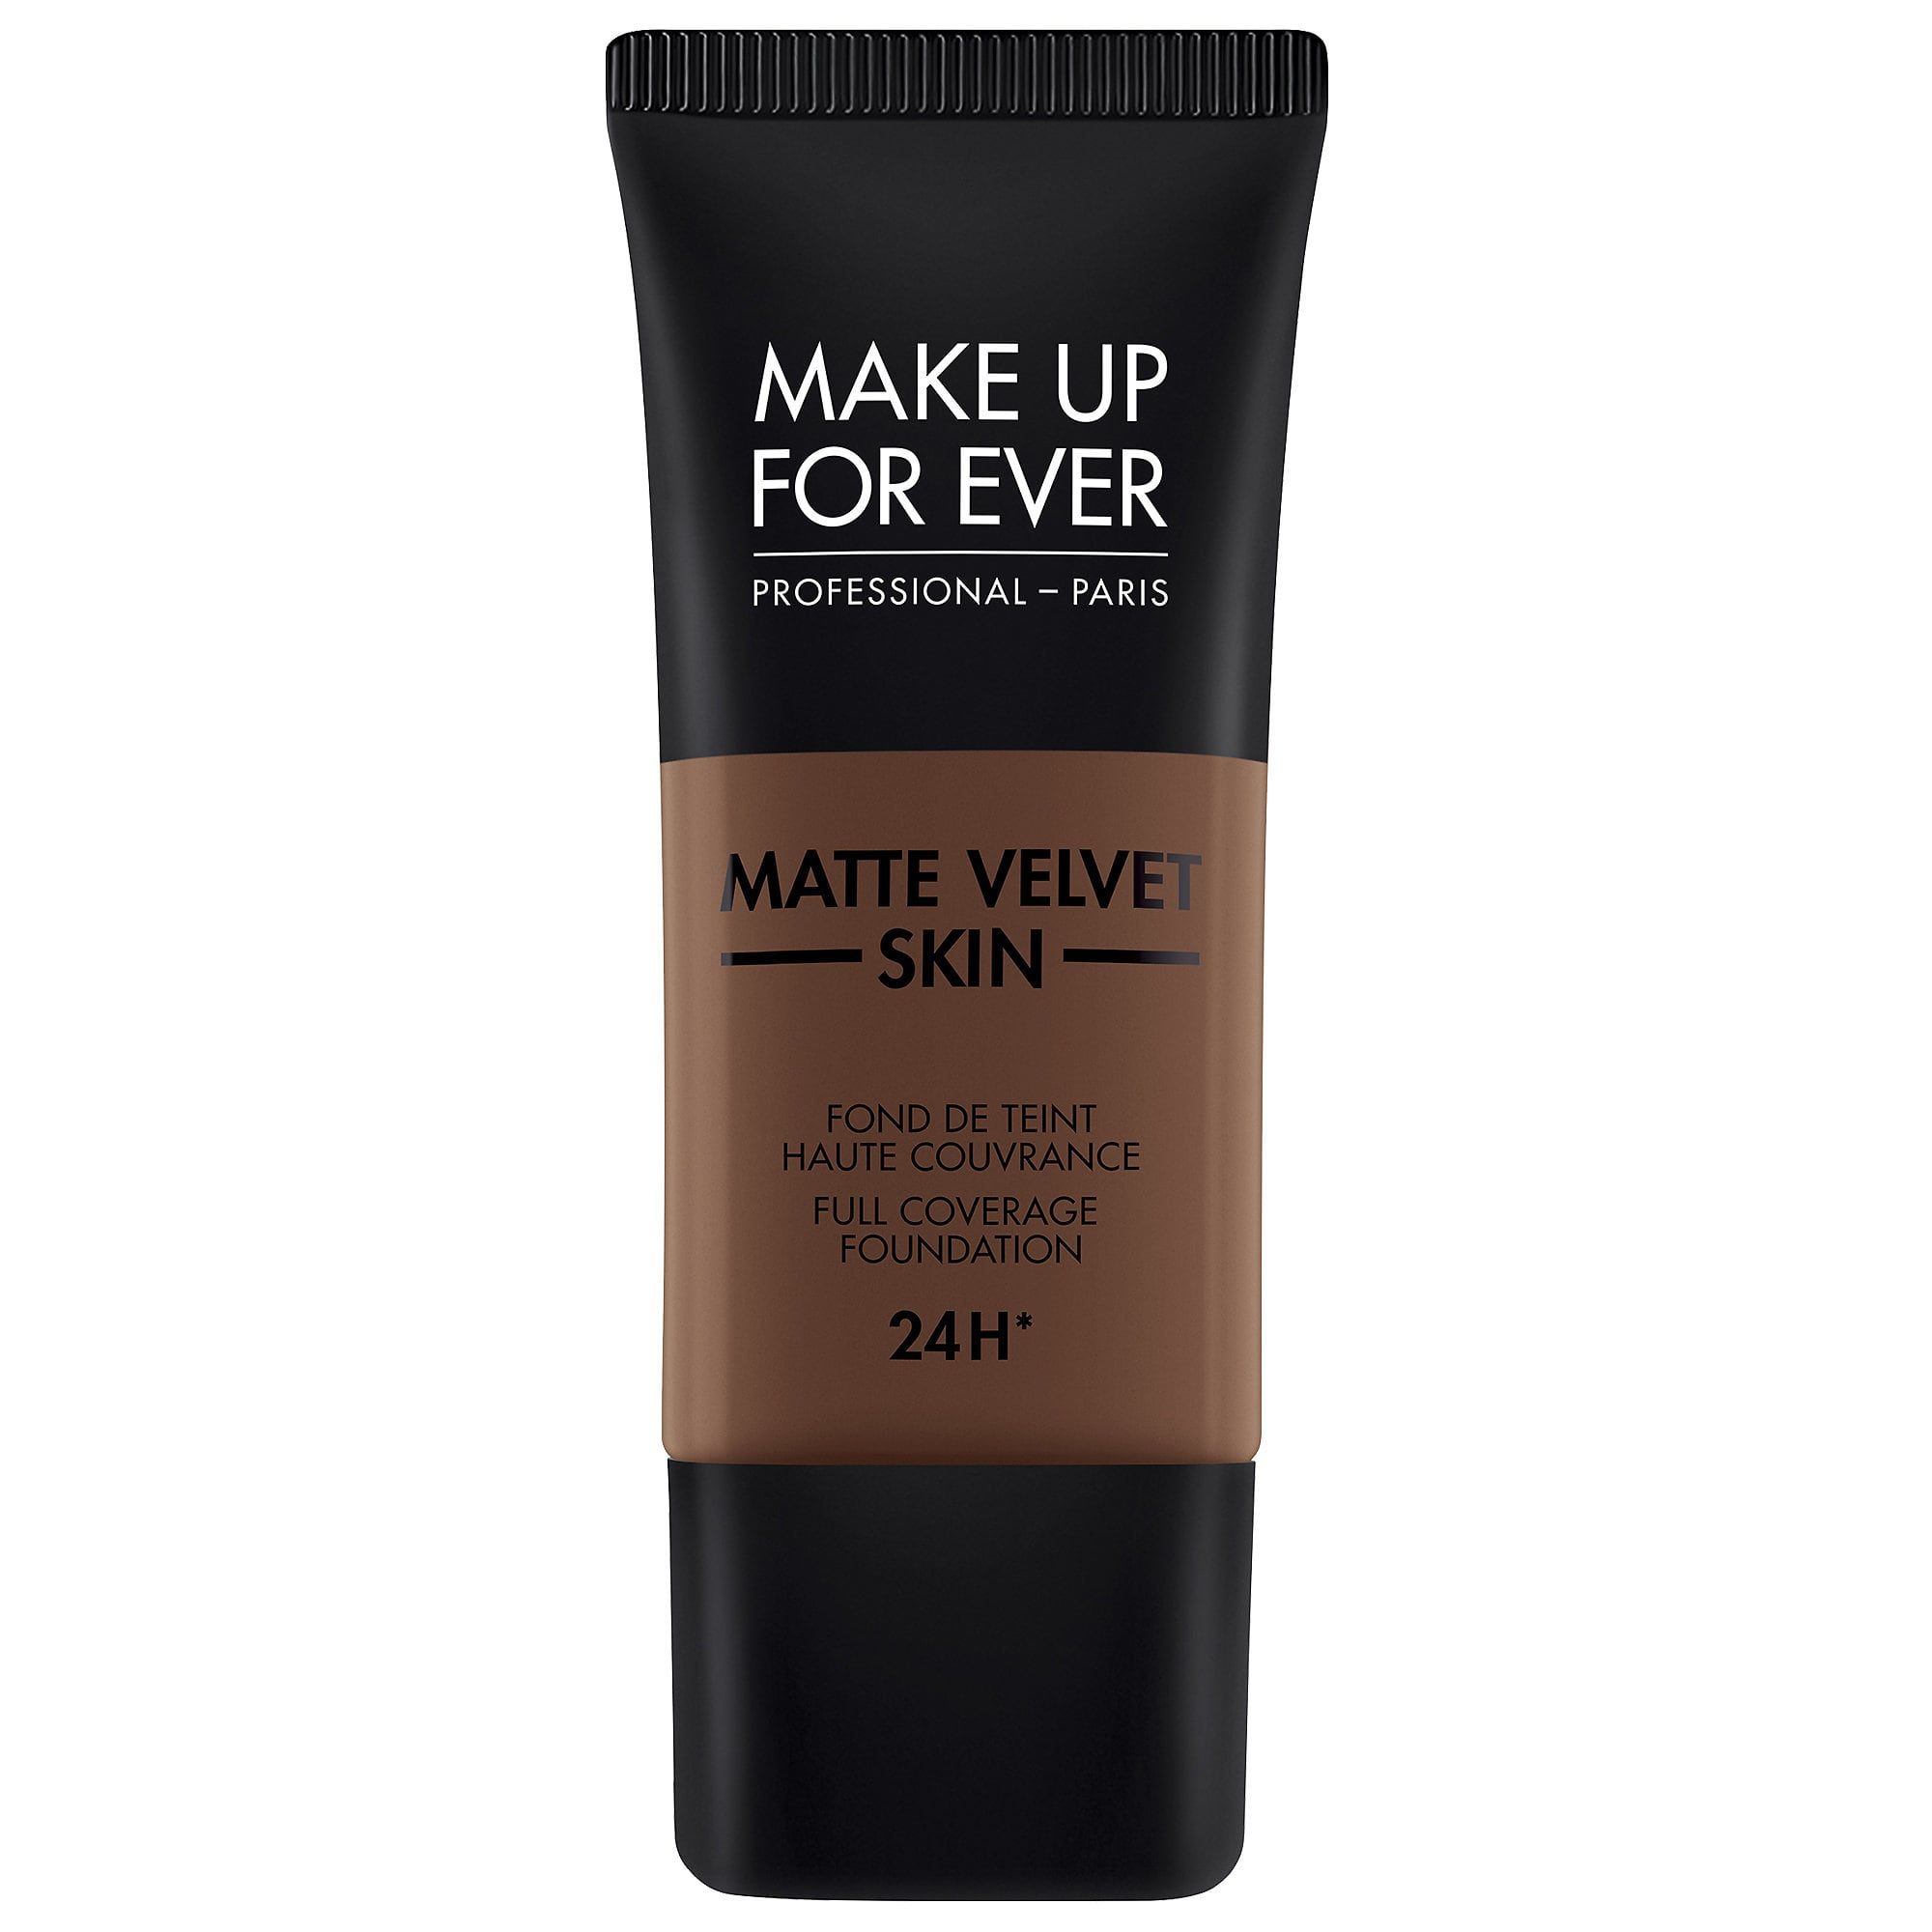 best matte makeup for oily skin